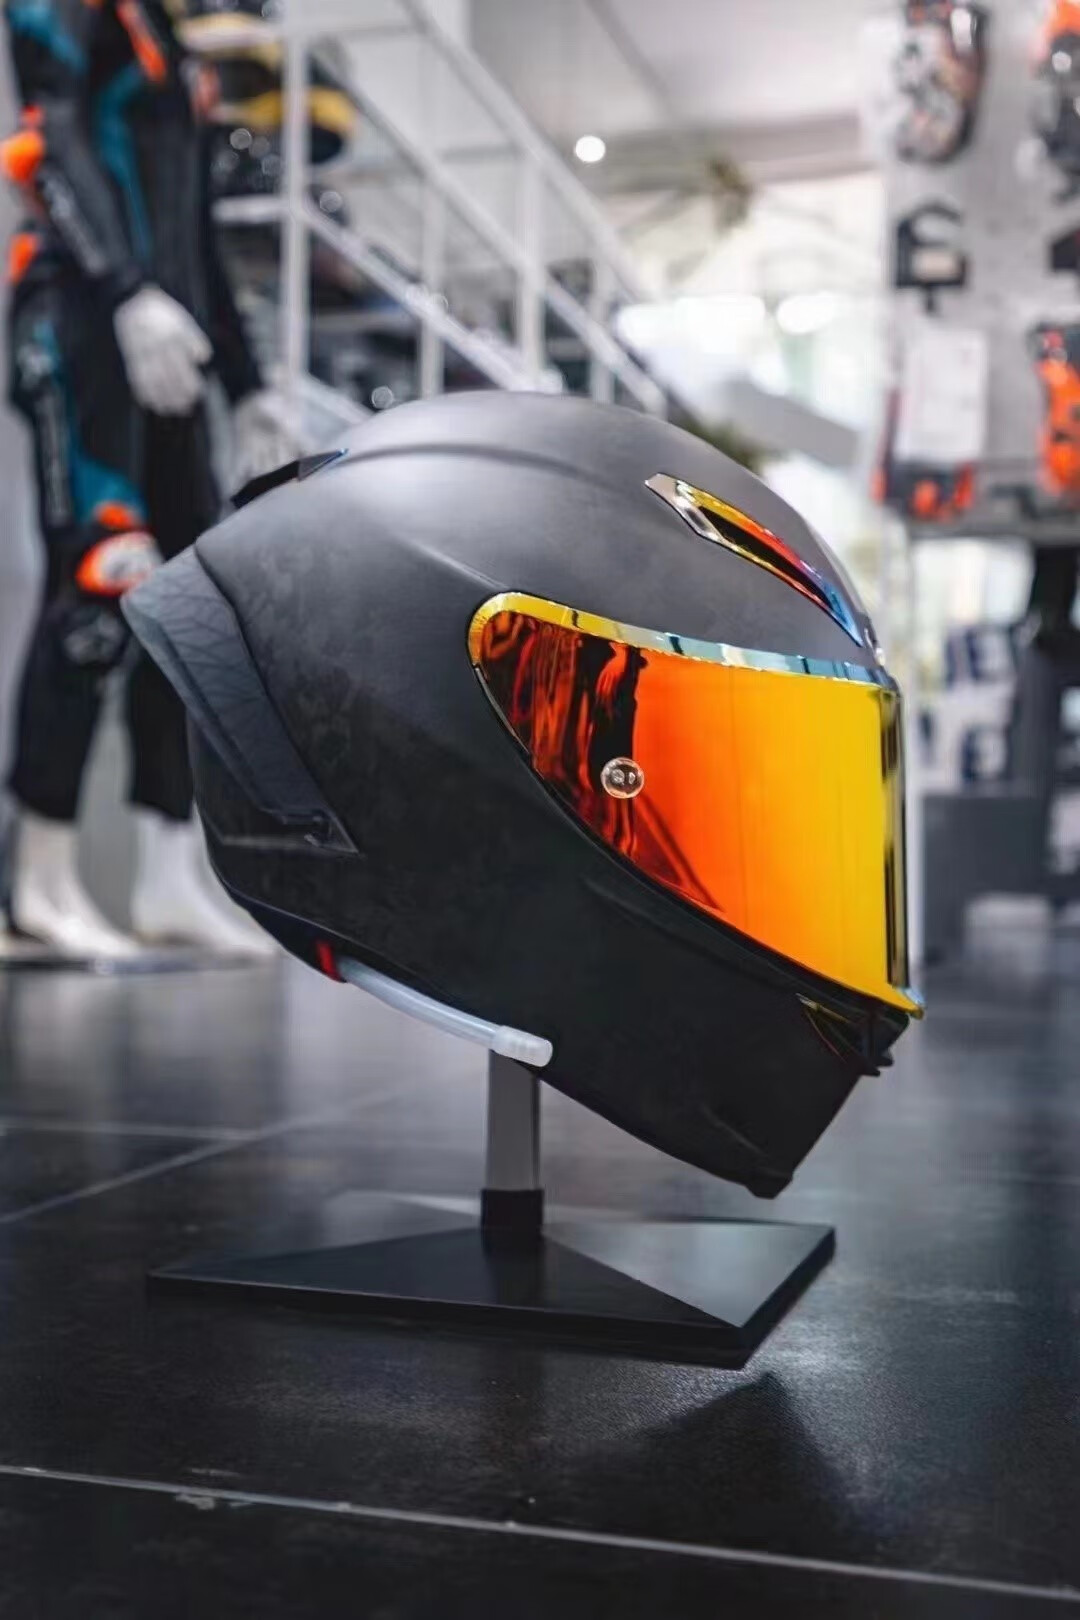 agv pista gprr变色龙冰蓝磨砂亮黑75周年摩托赛车碳纤维头盔全盔